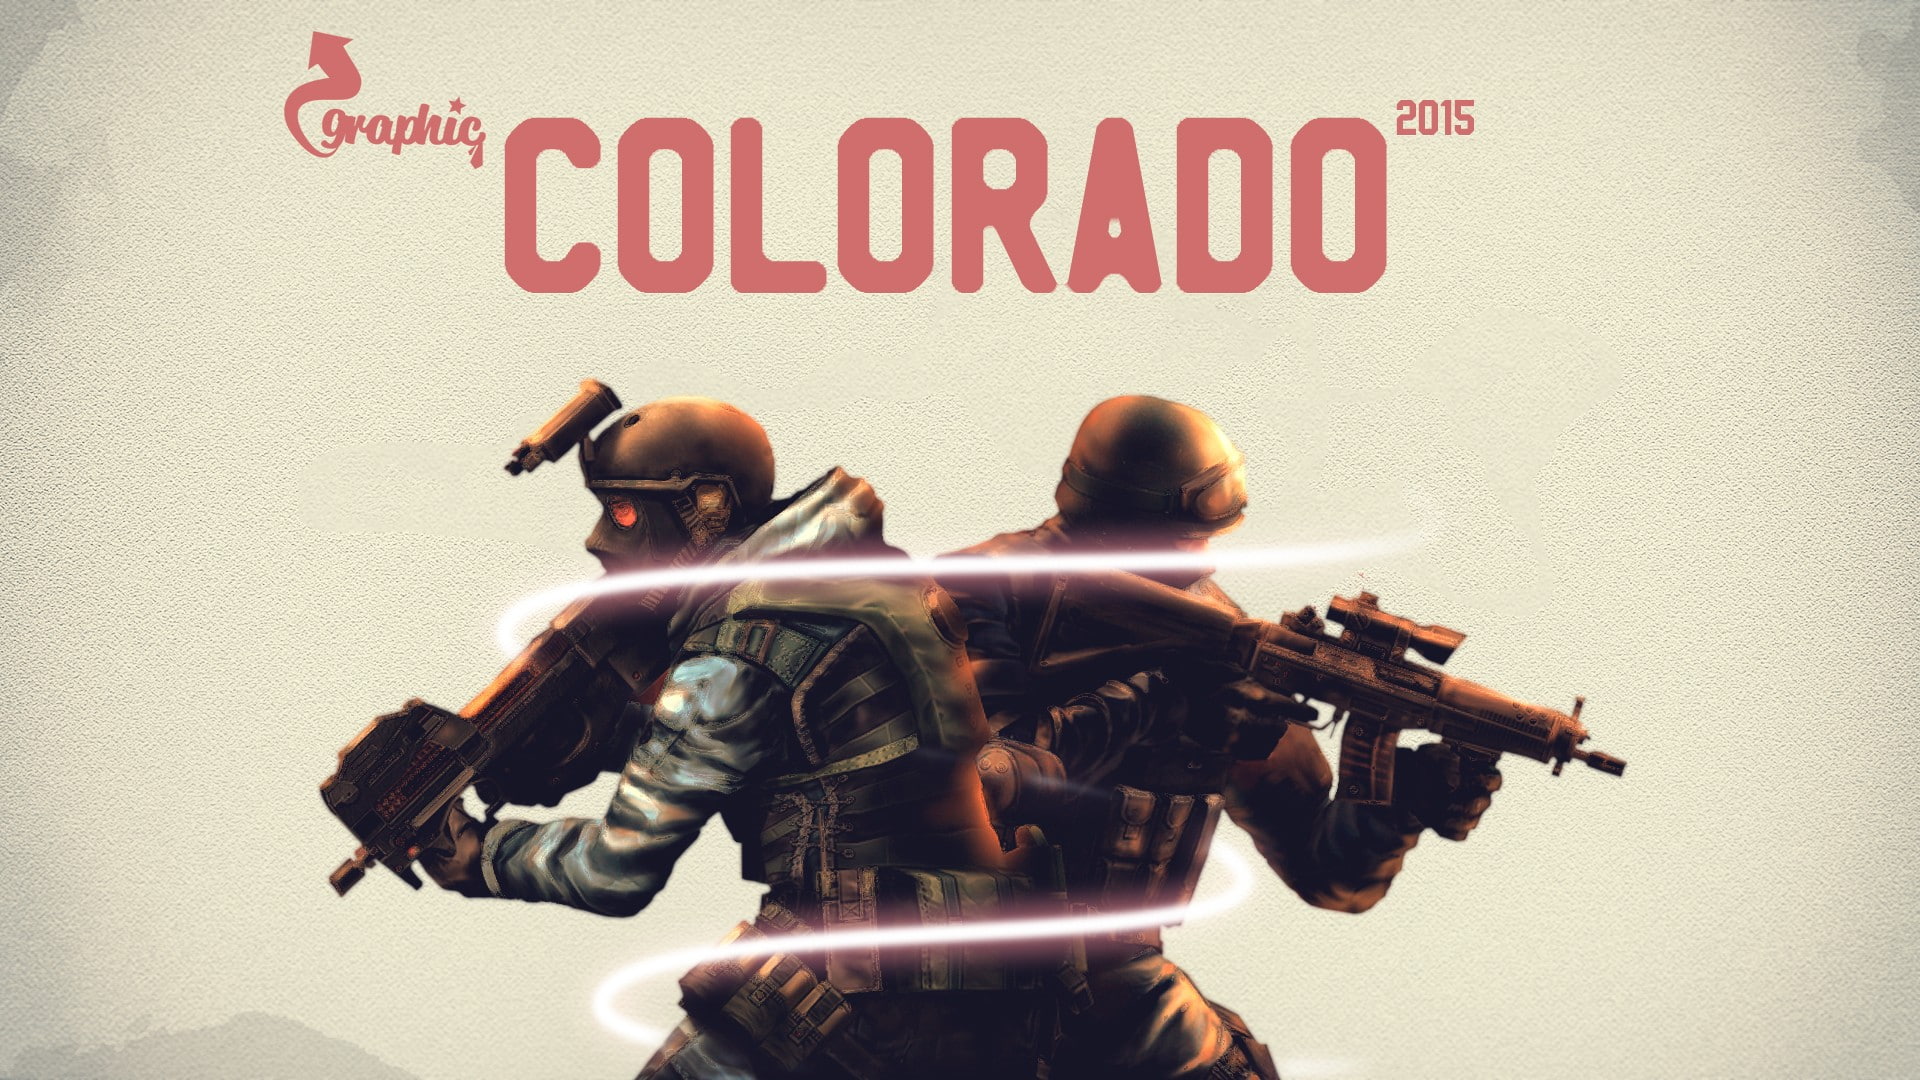 Colorado, CrossFire, text, conflict, weapon, gun, military